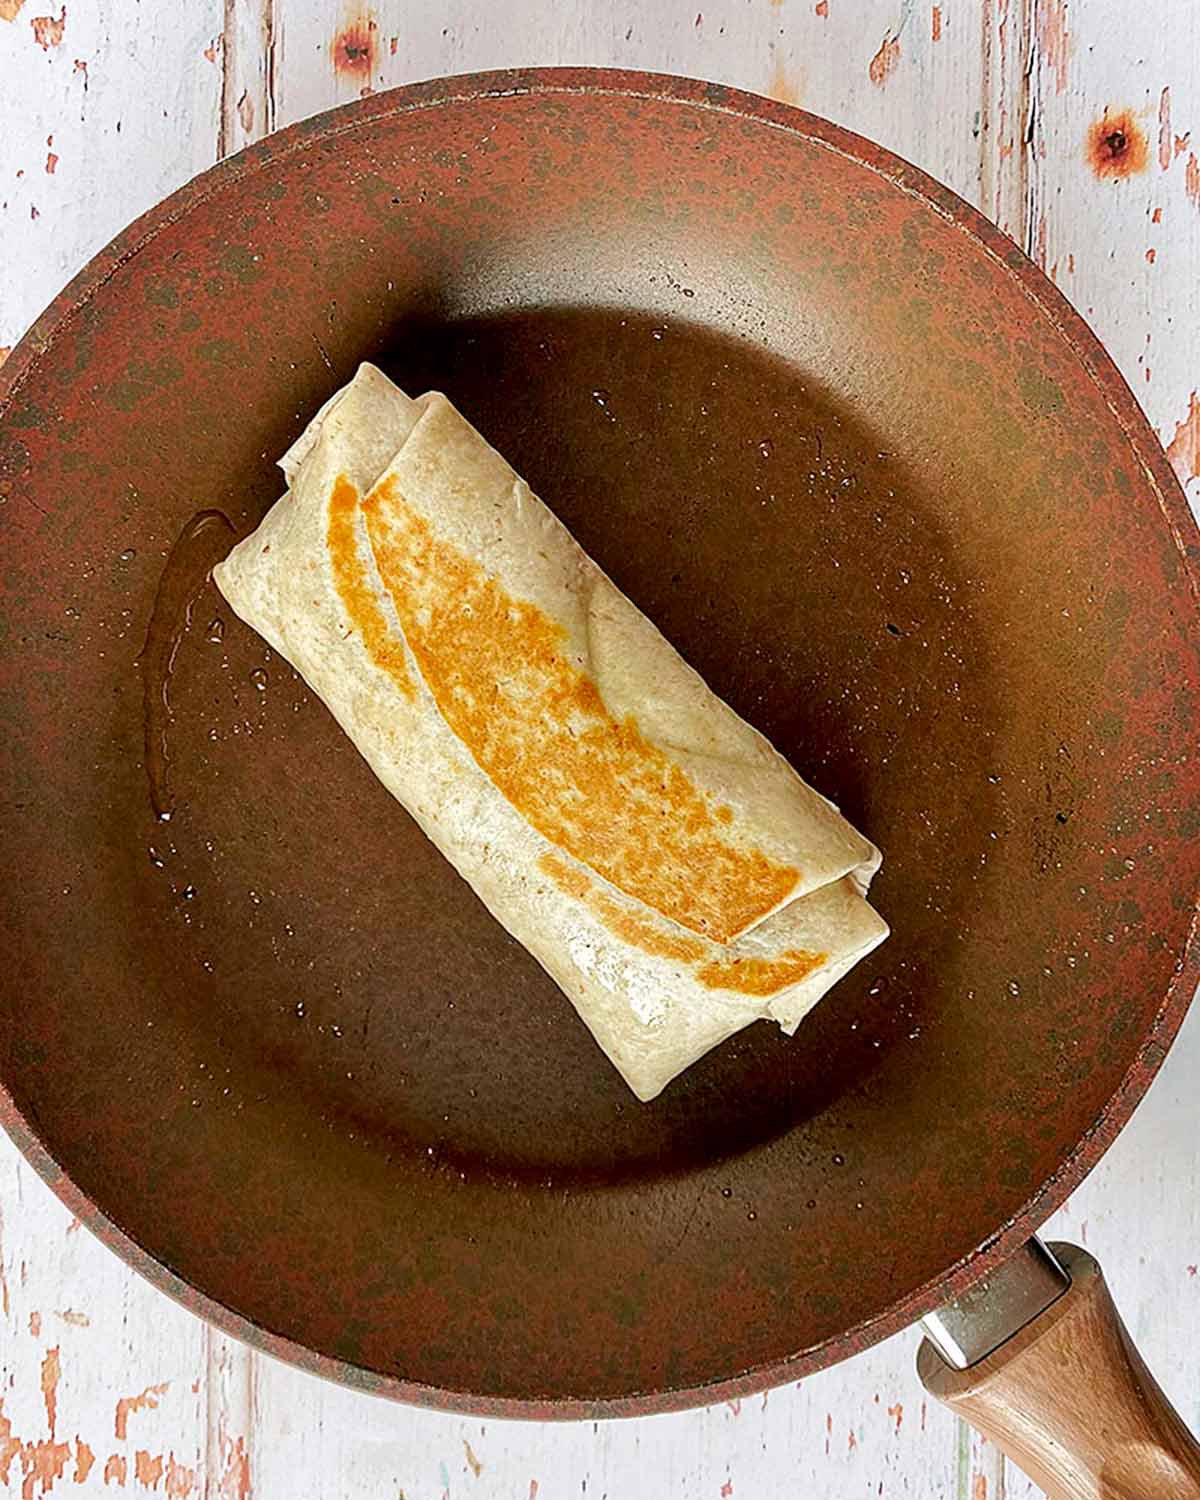 A burrito frying in a pan.